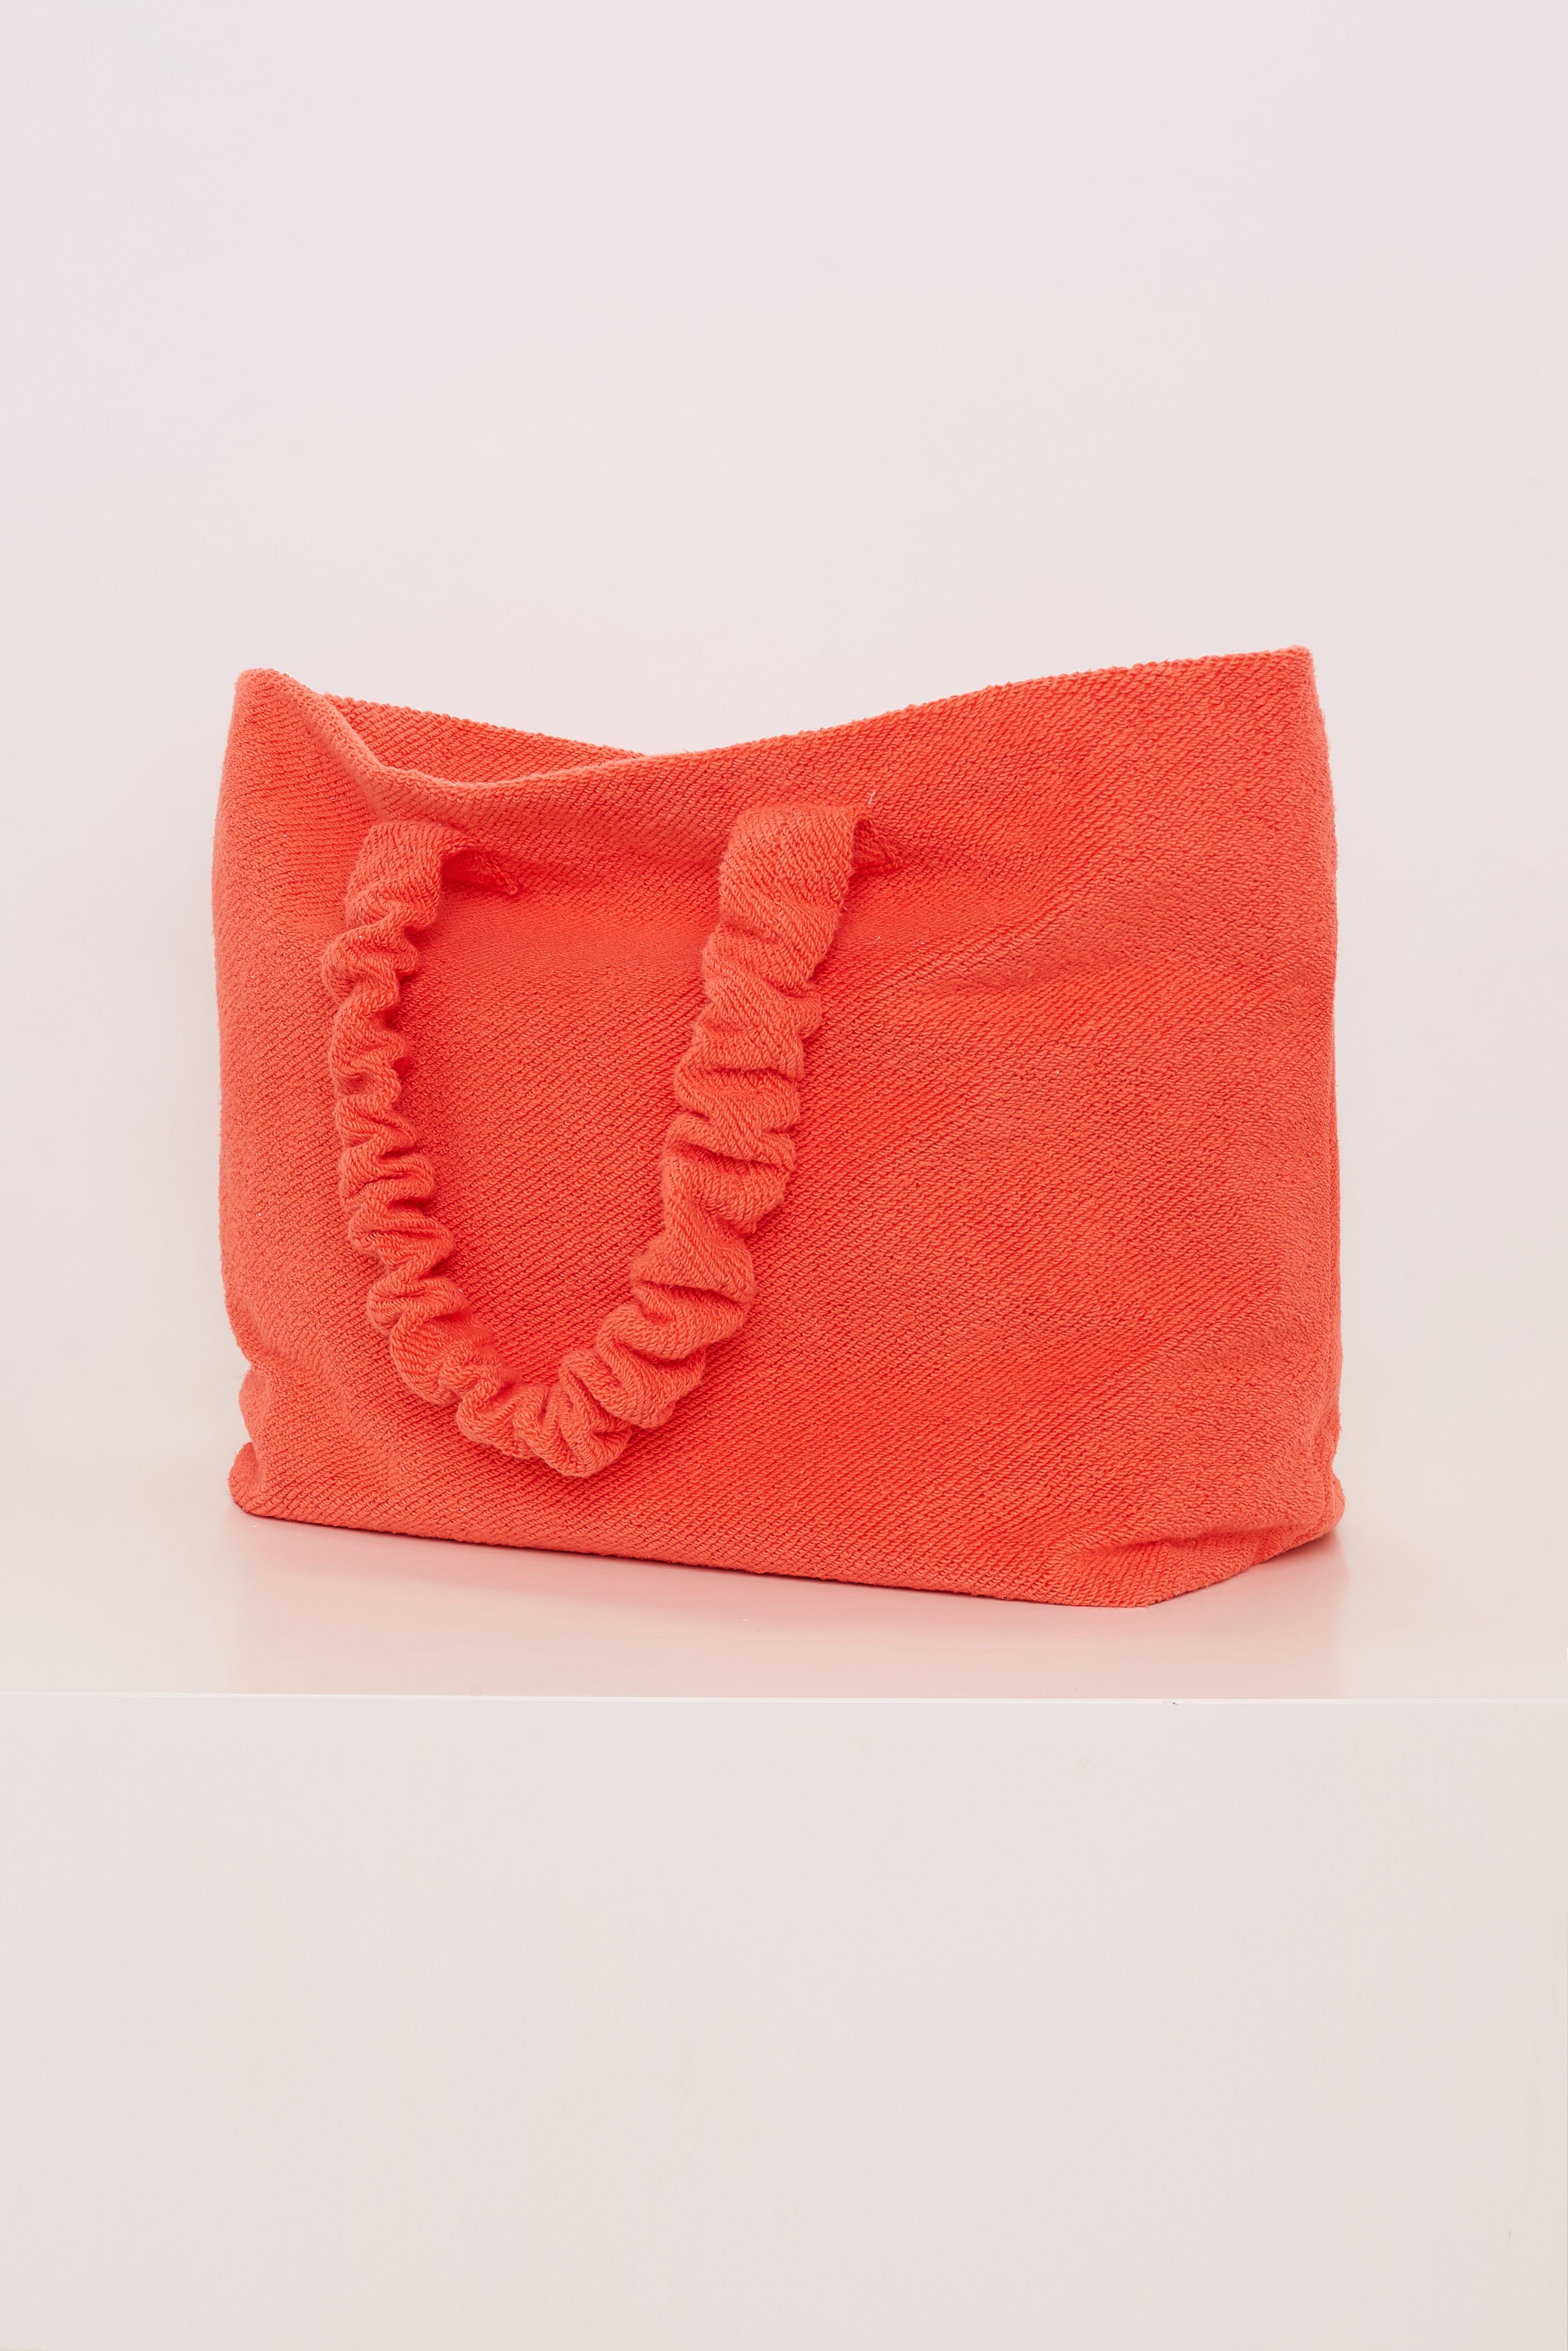 Dorothee-Schumacher-OUTLET-SALE-MODERN-TOWELLING-handbag-Taschen-OS-spiced-orange-ARCHIVE-COLLECTION-4.jpg